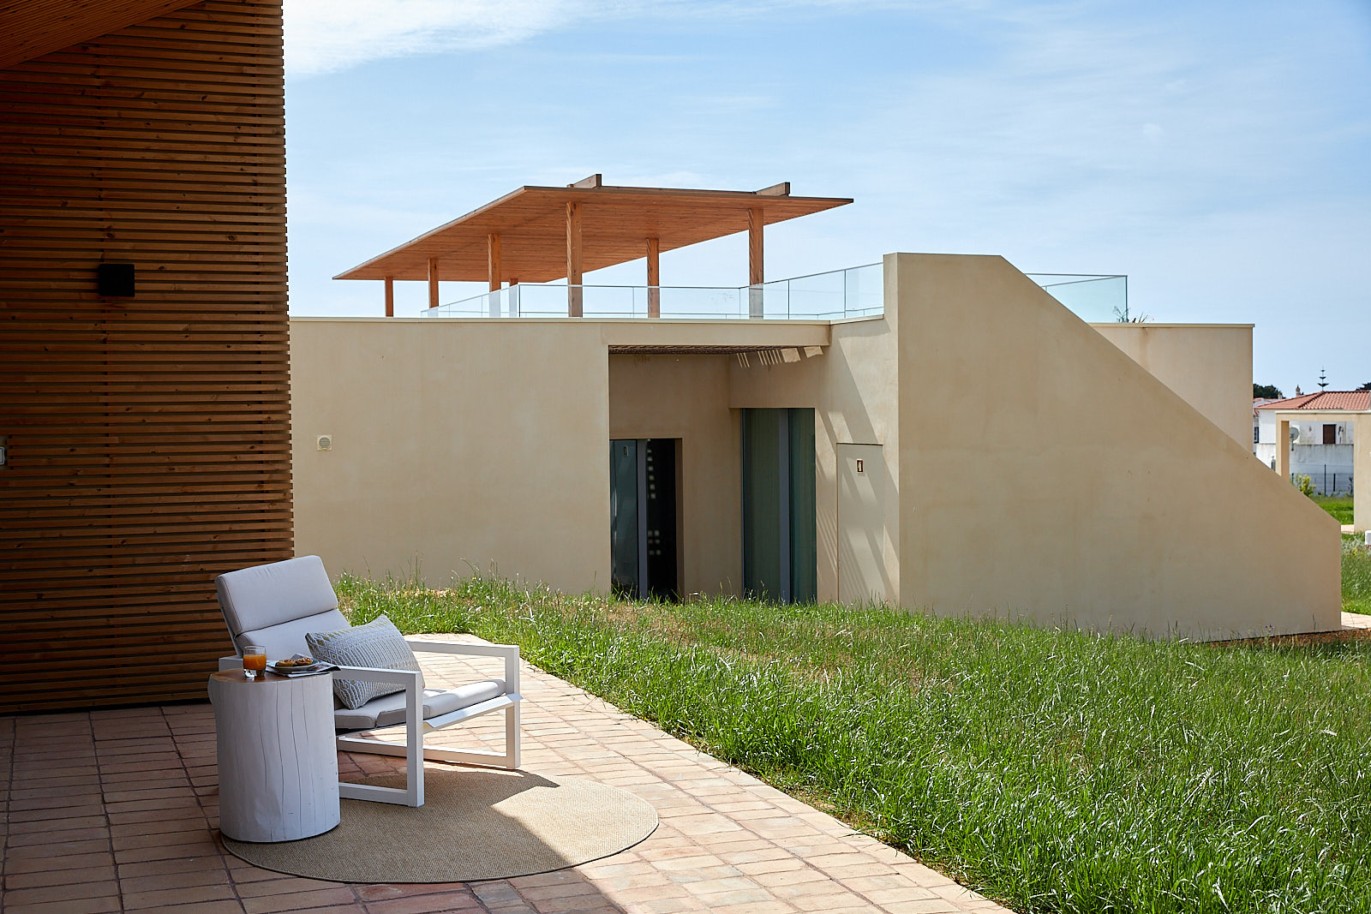 2 bedroom apartment in resort, for sale in Porches, Algarve_230498